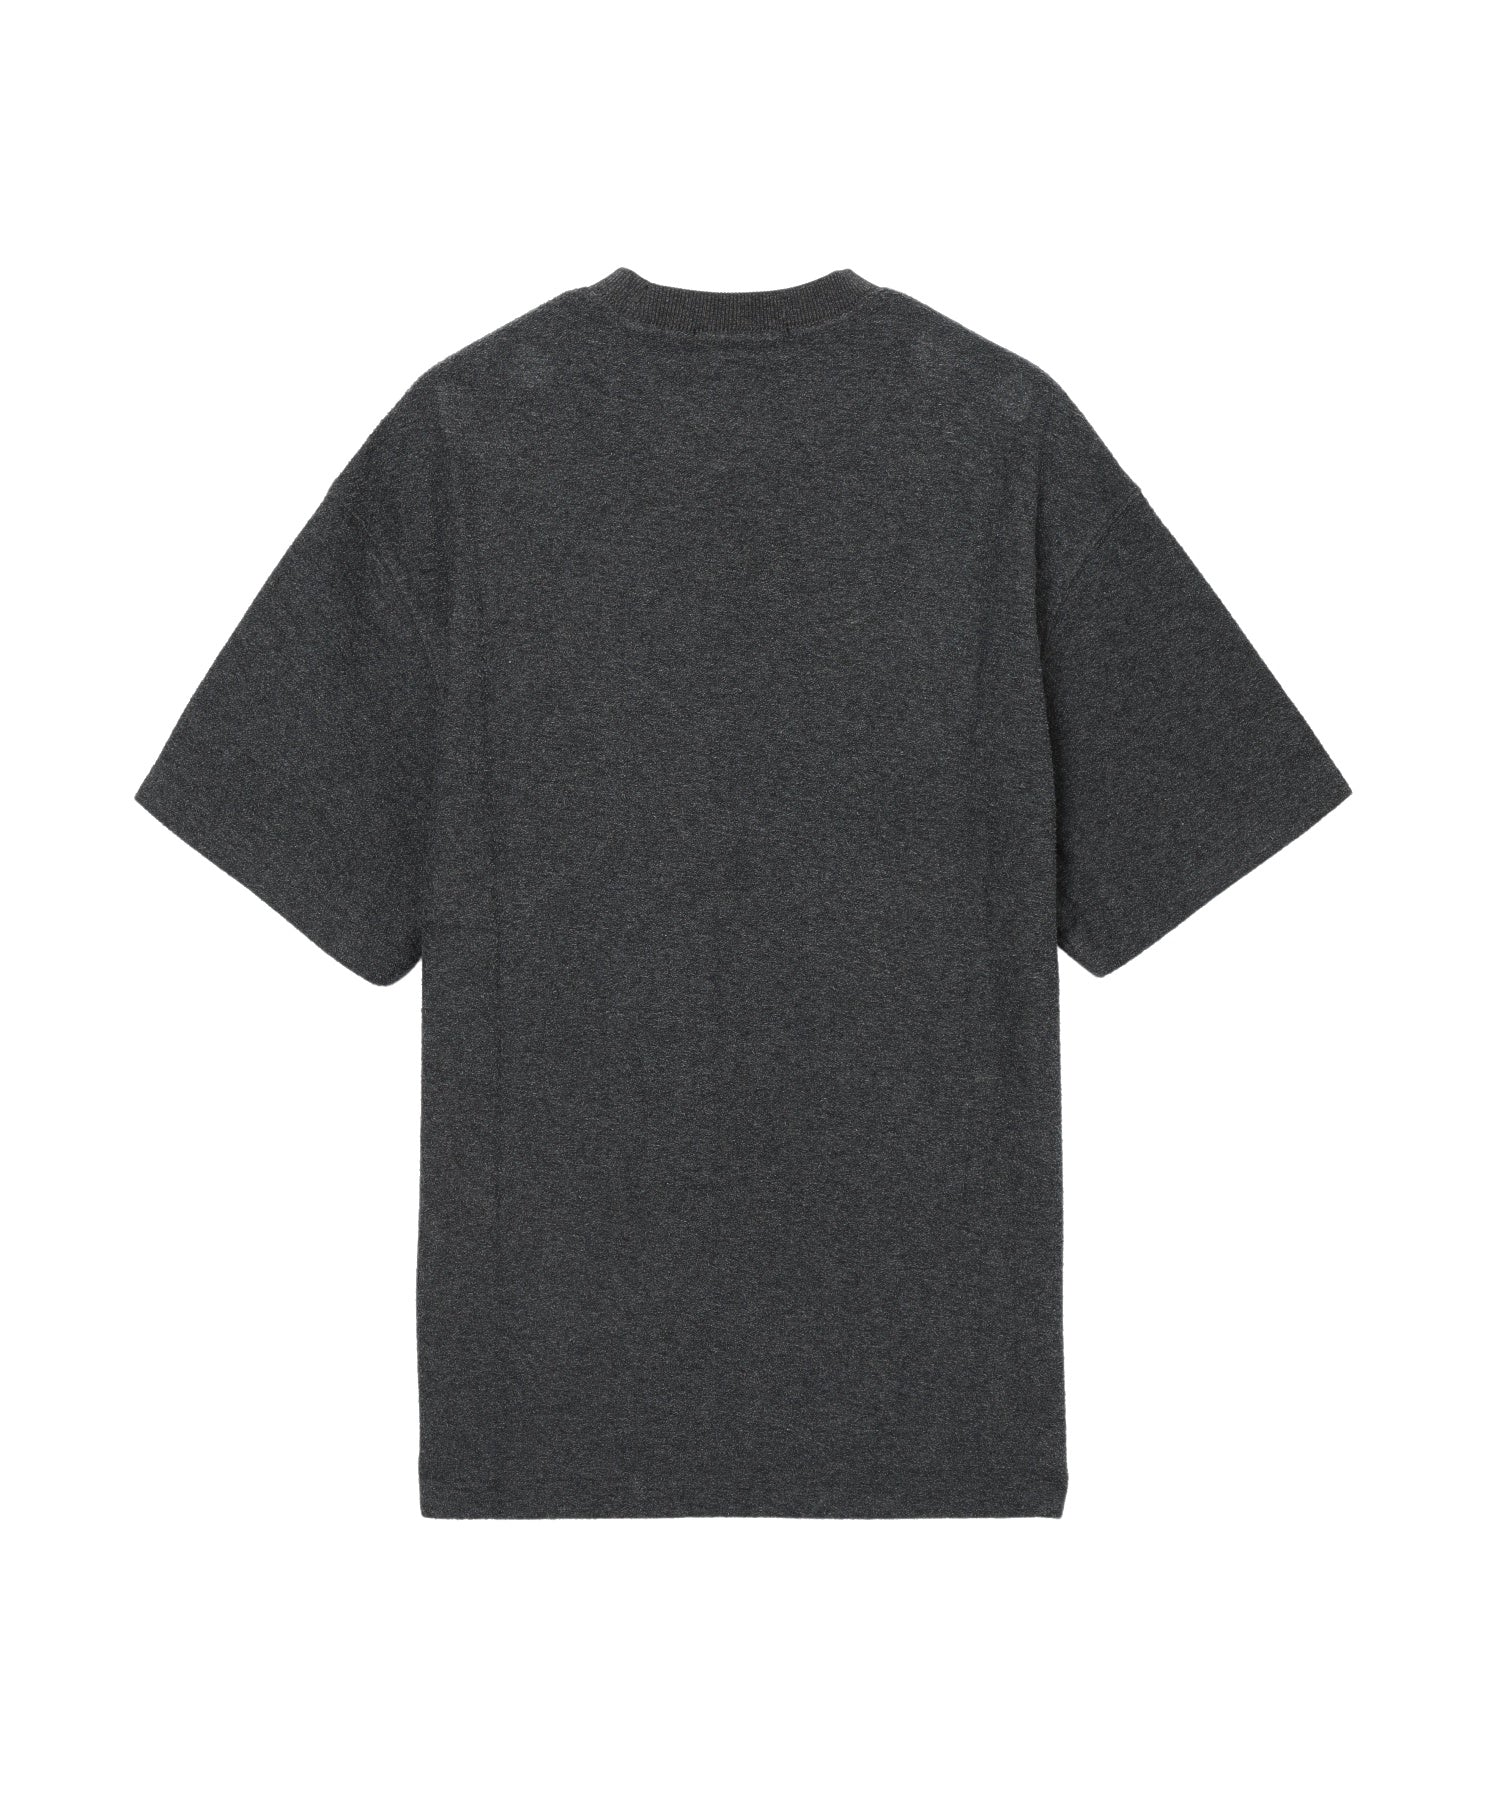 CONP BY SAD PEOPLE/サッドピープル/ Black Towel T-shirt/T-01-AW23